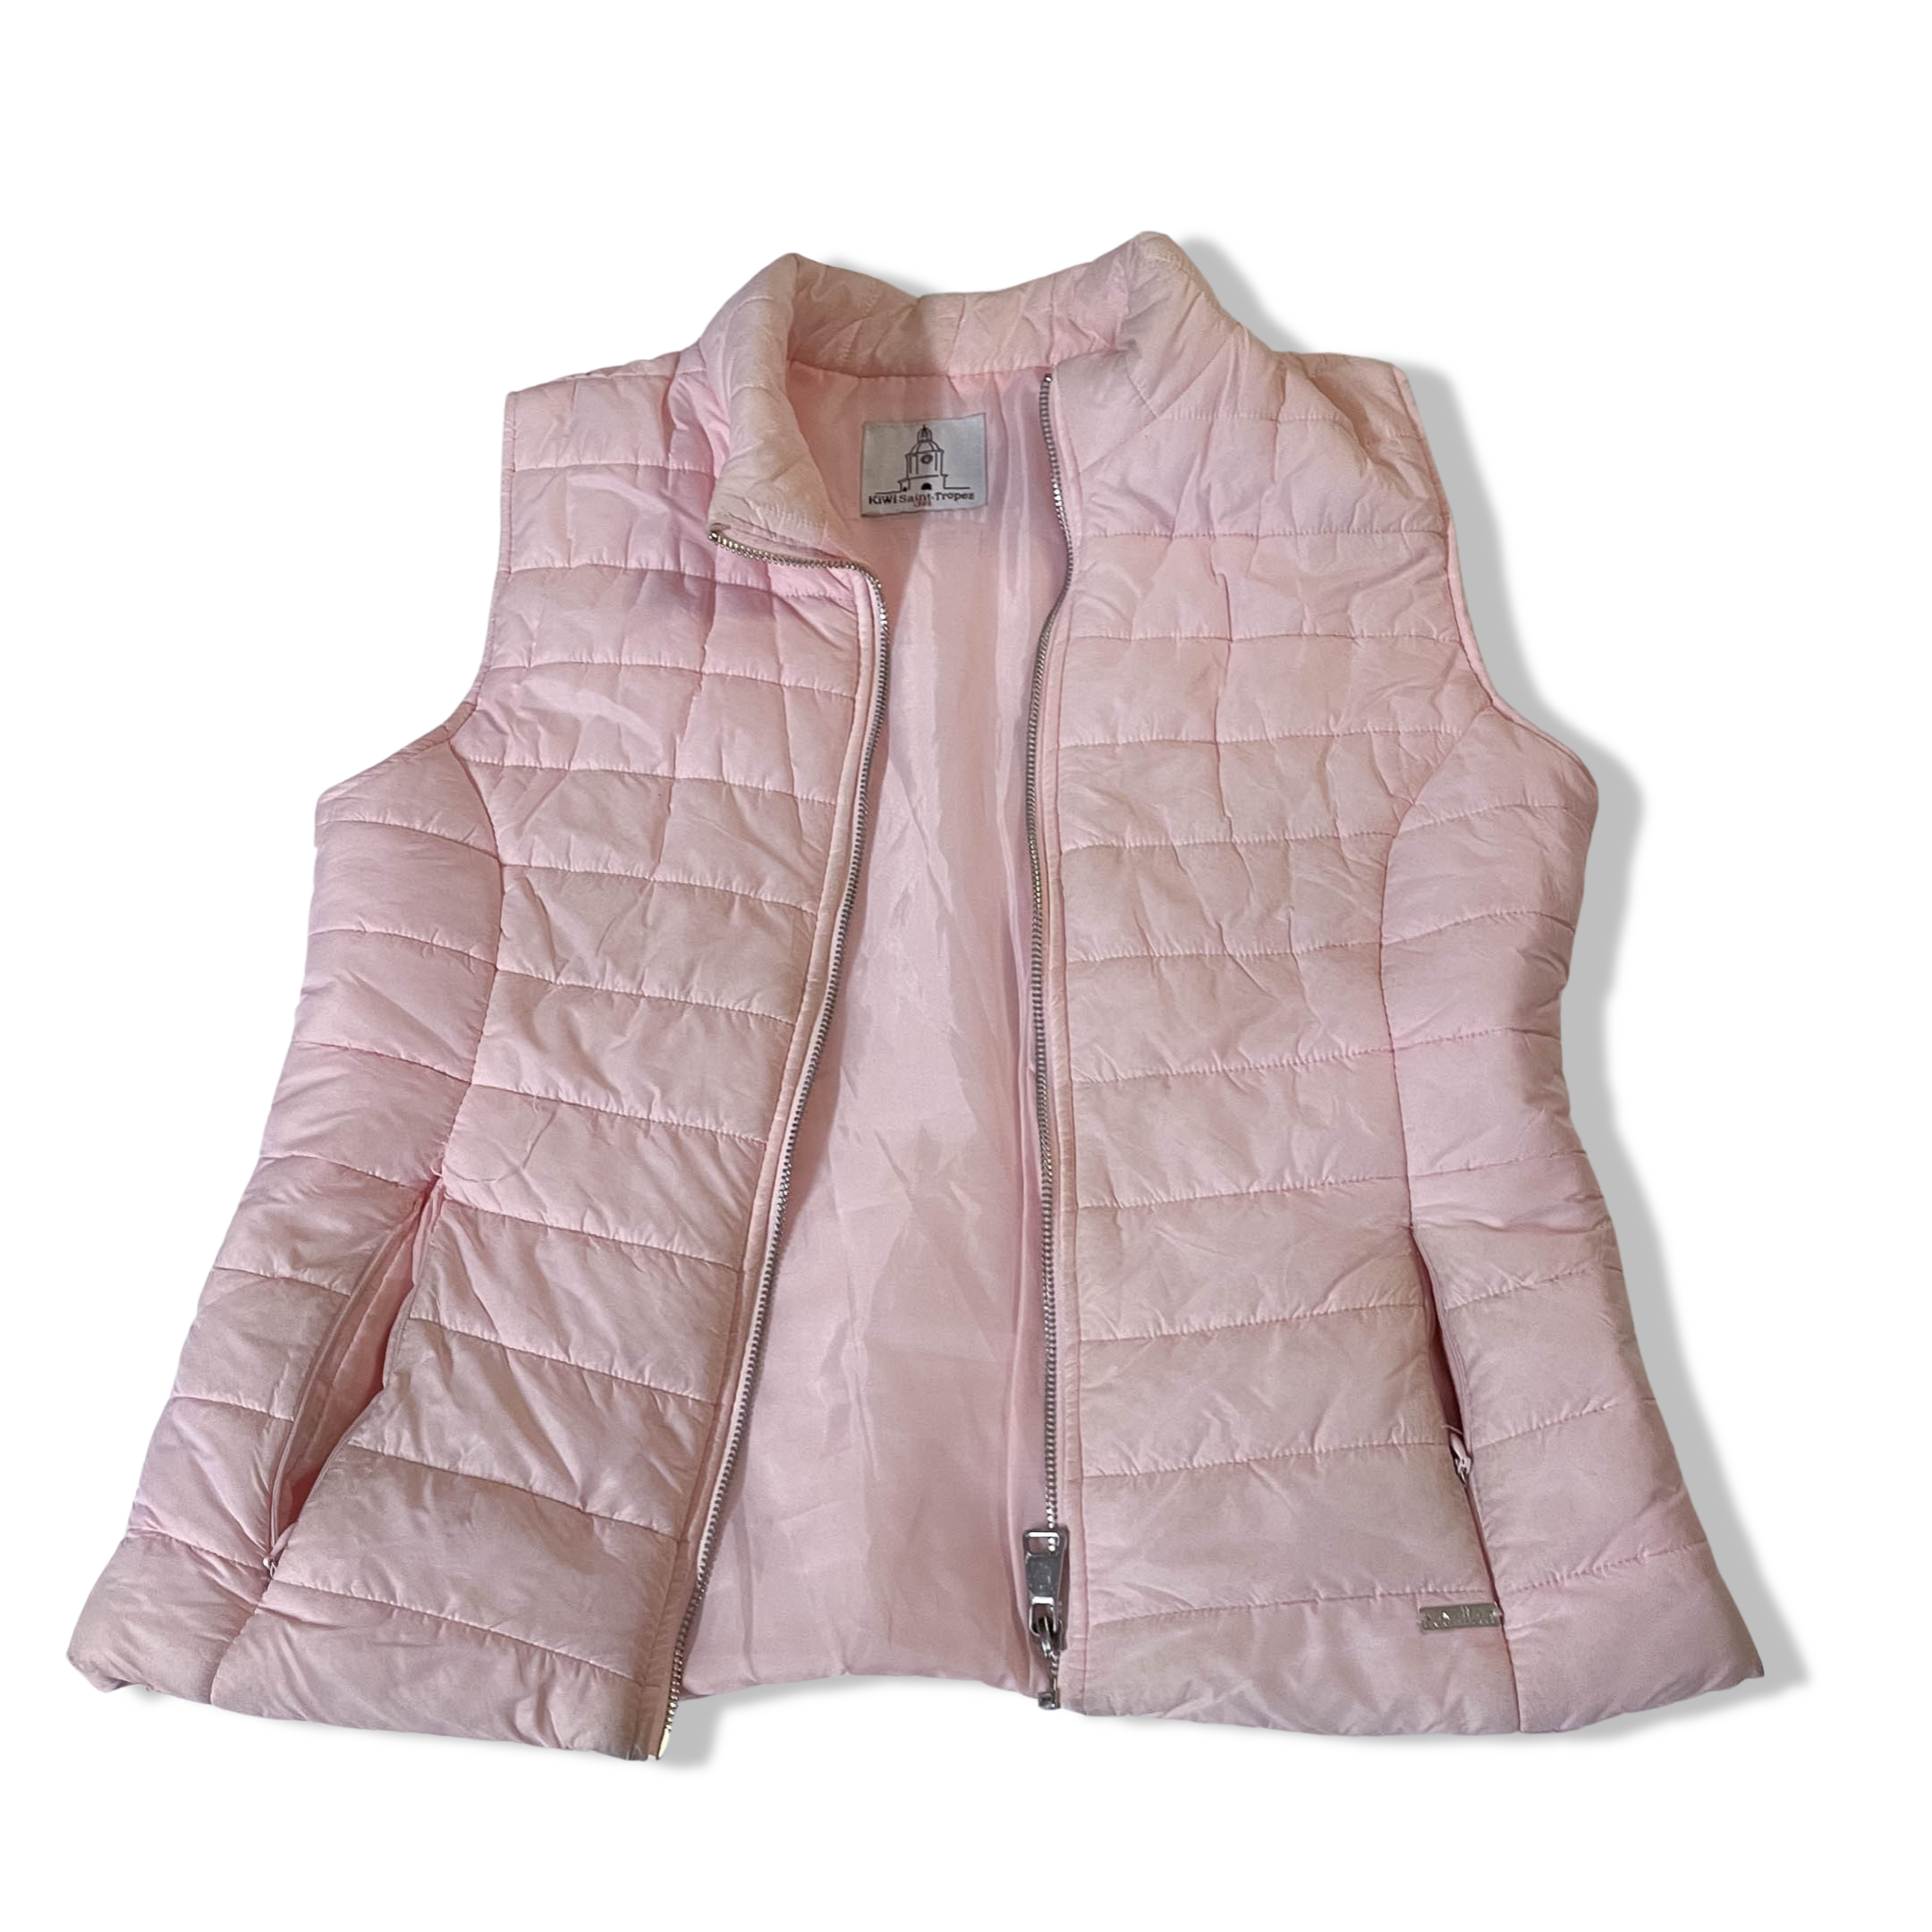 Vintage women's Kiwi Saint tropez pink puffer padded sleeveless jacket in M